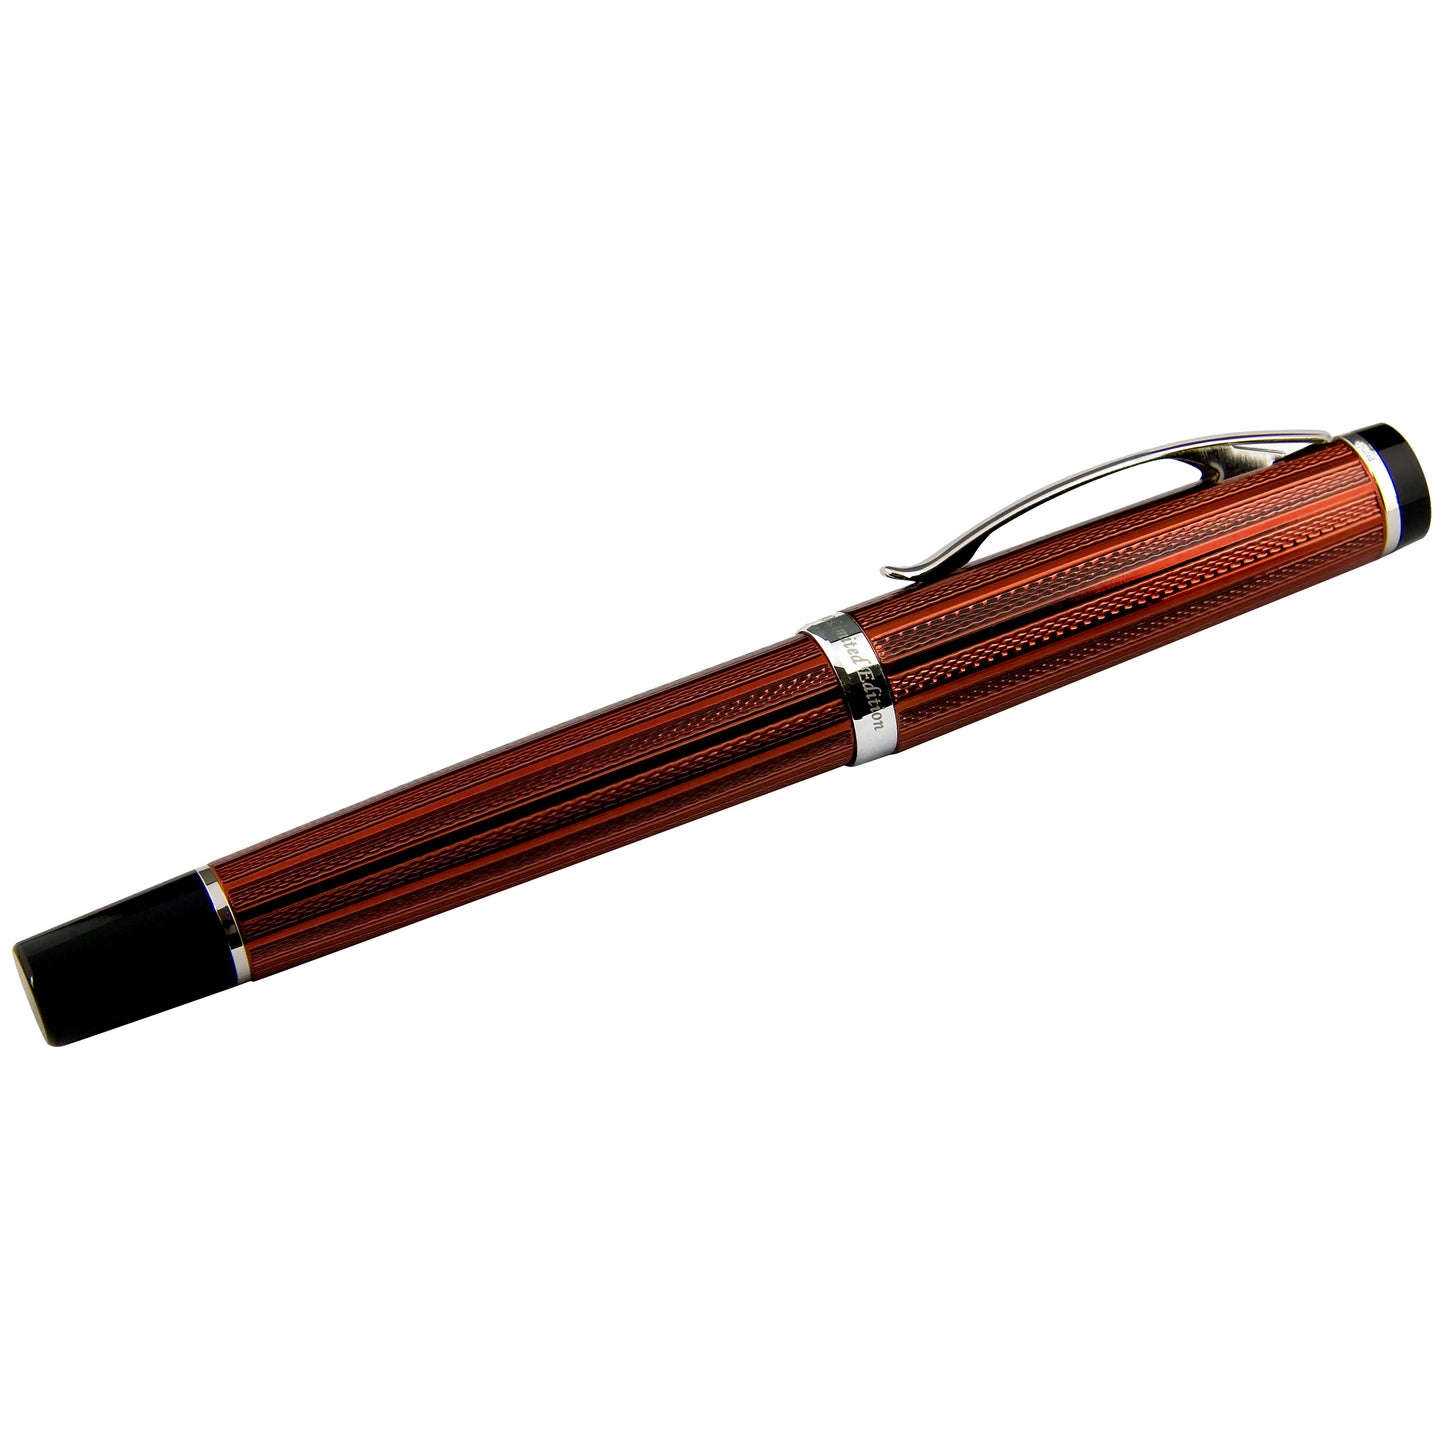 Xezo - Side view of the capped Incognito Copper R rollerball pen